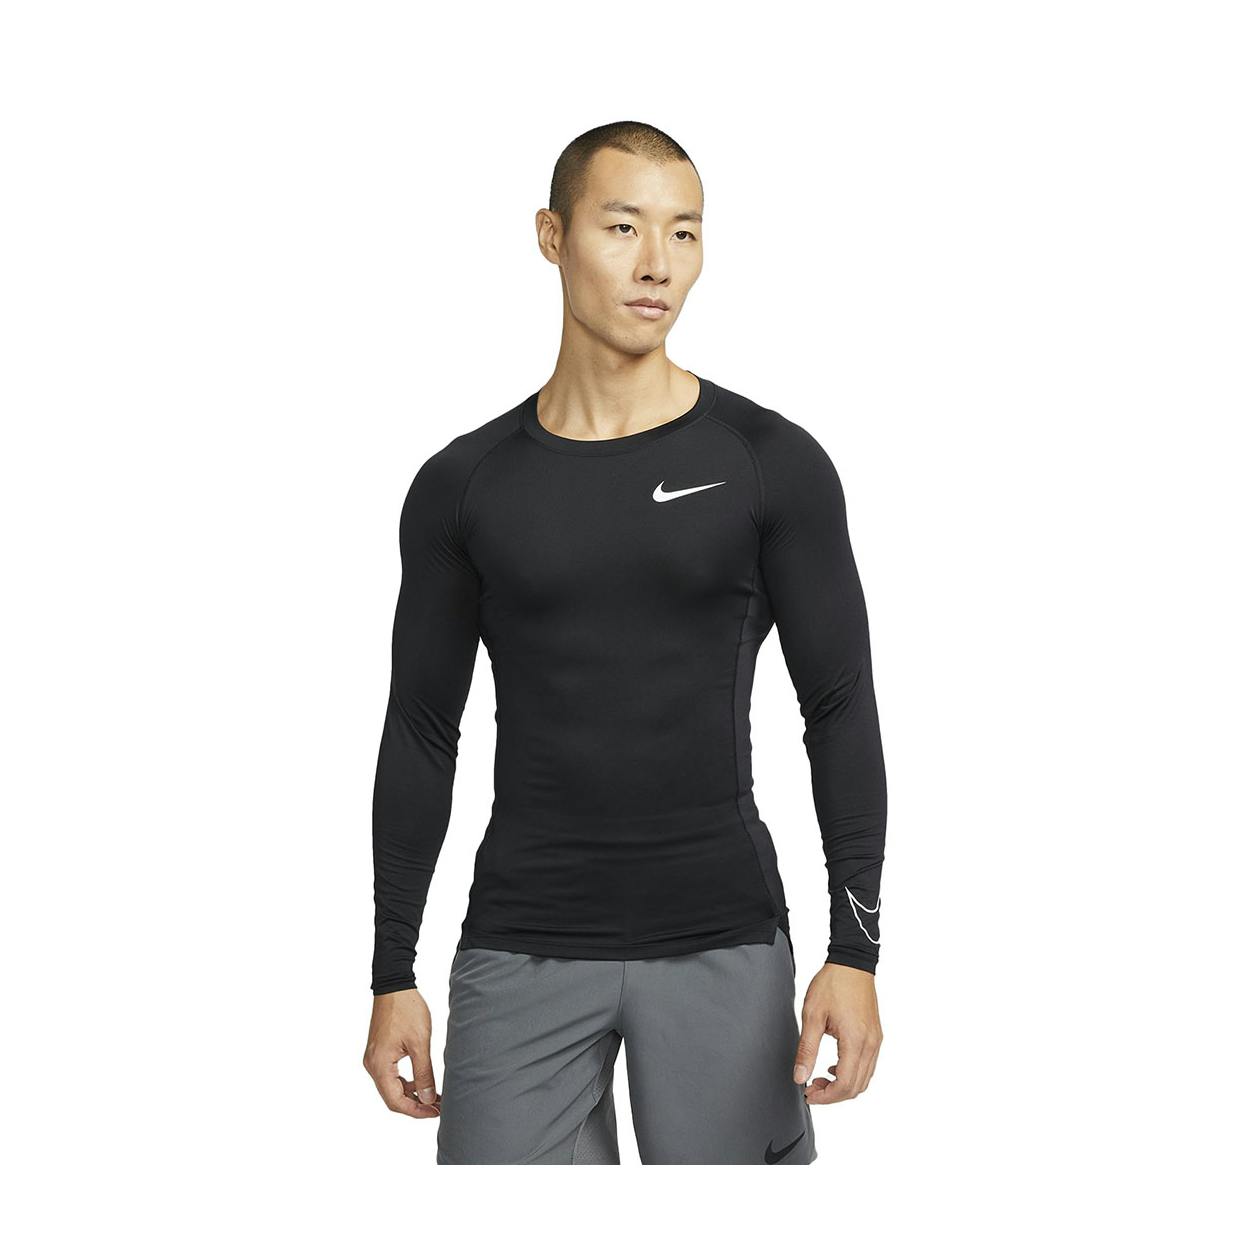 verbergen Michelangelo Tweet Nike Pro Dri-FIT Tight Fit Shirt Men | 21RUN